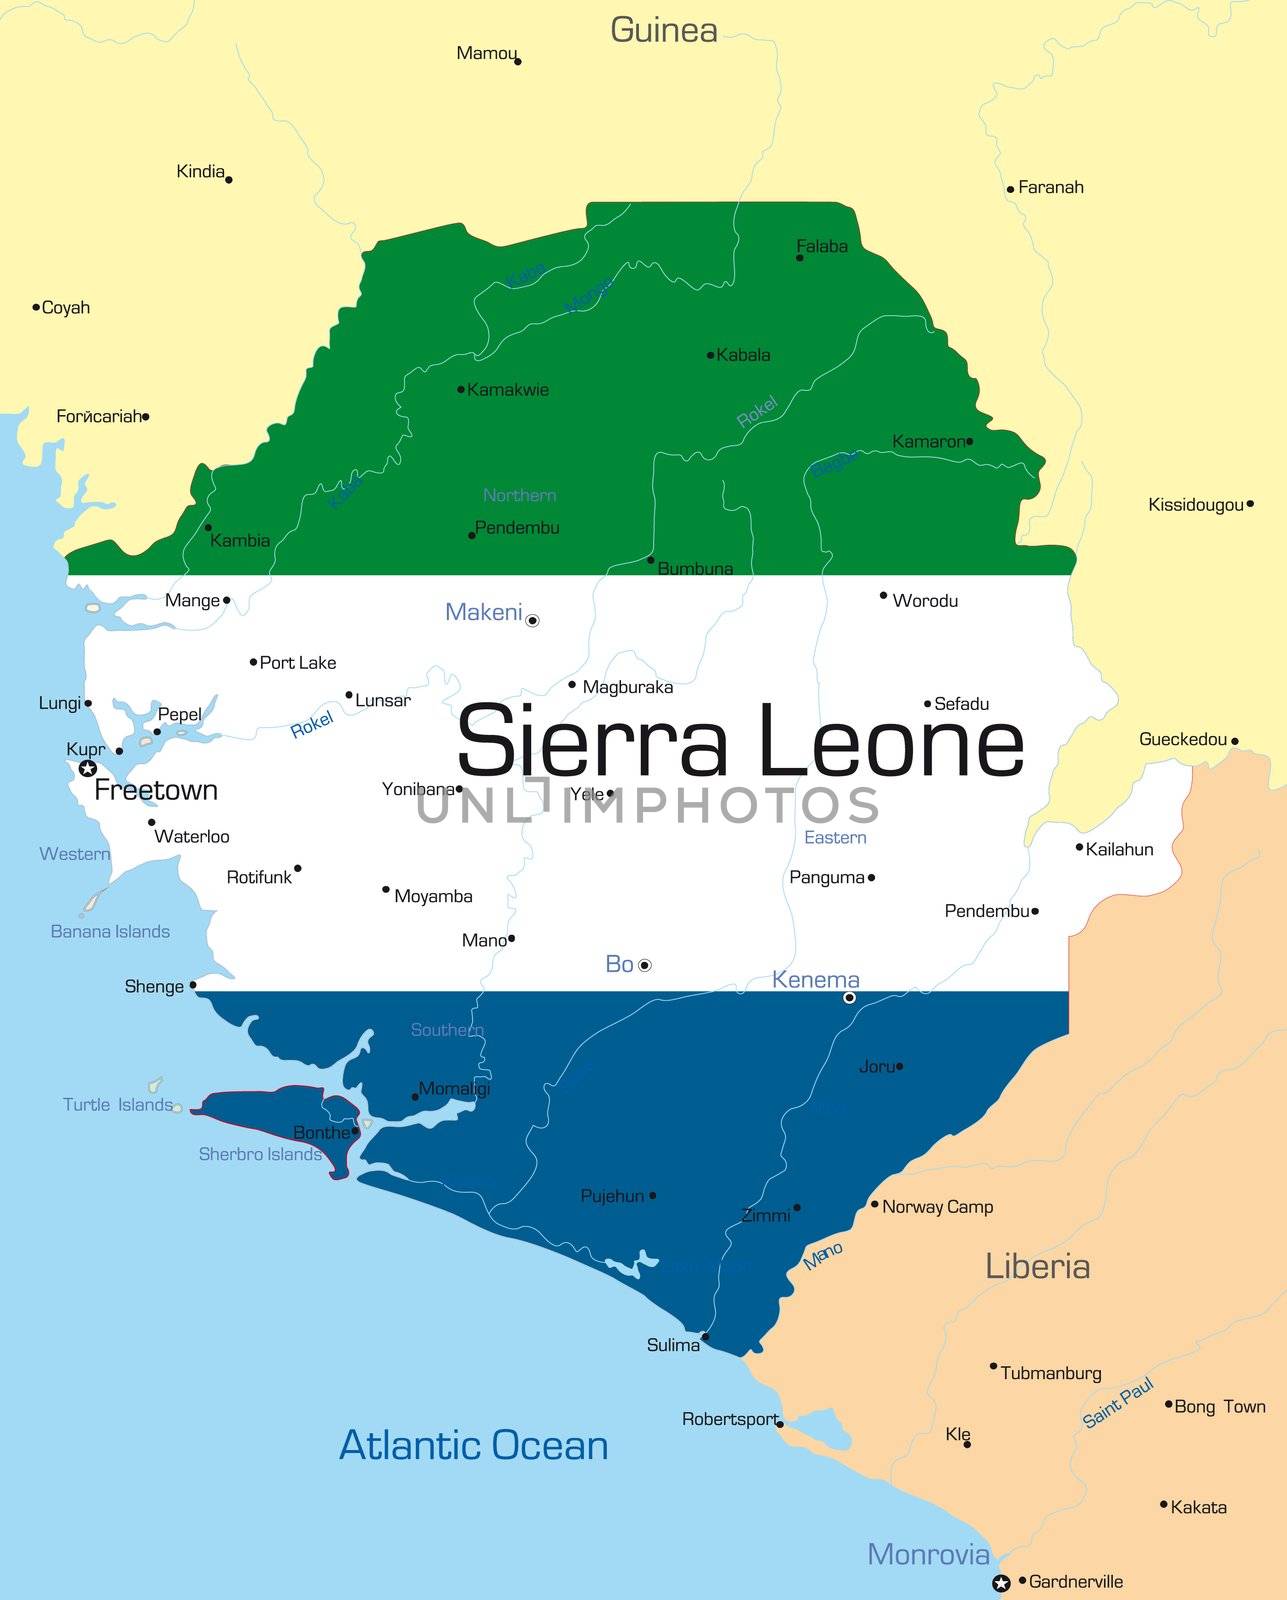 Sierra Leone by rusak